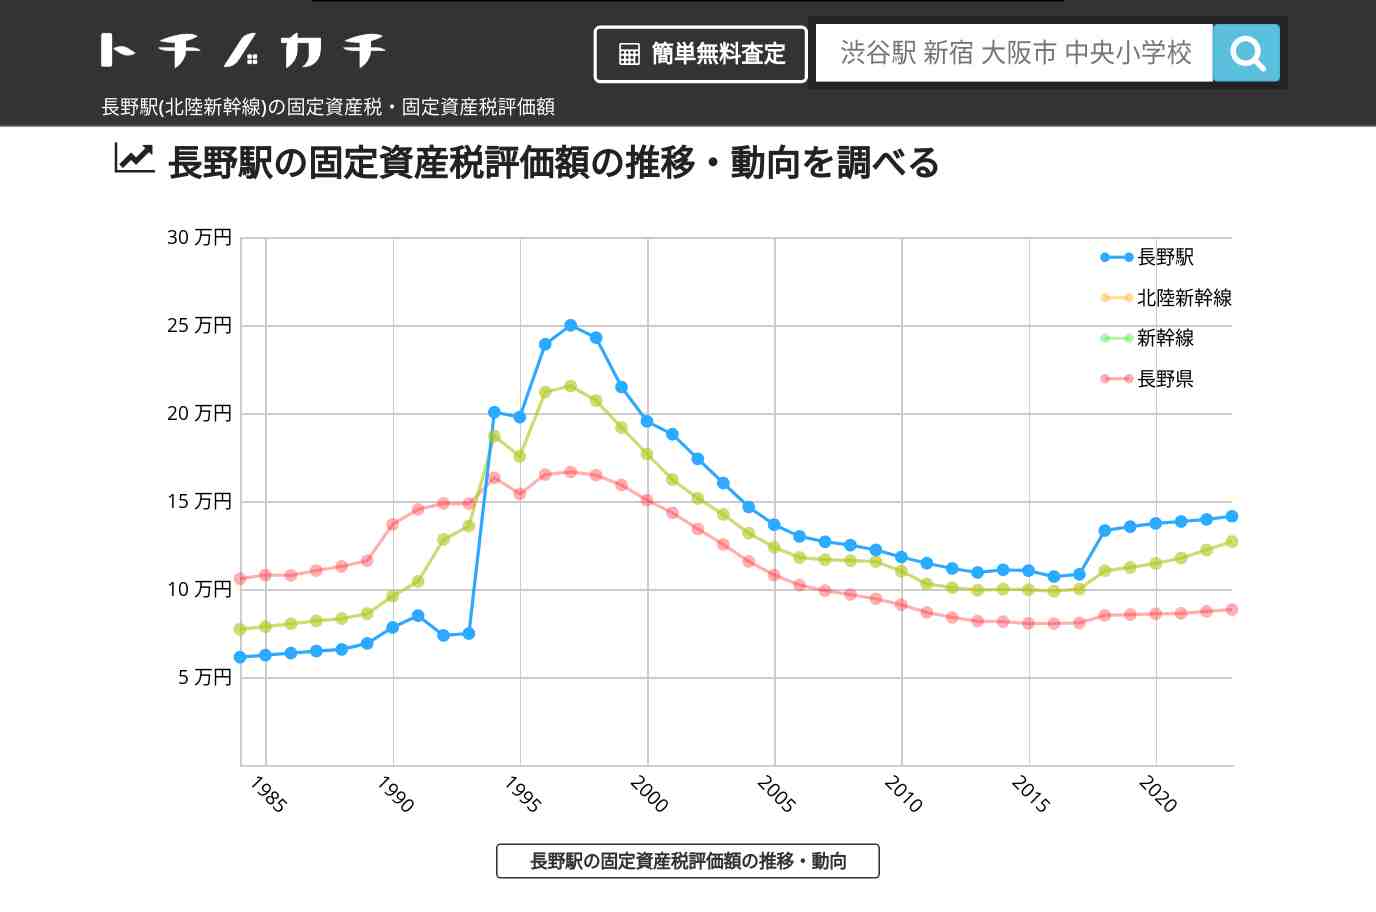 長野駅(北陸新幹線)の固定資産税・固定資産税評価額 | トチノカチ